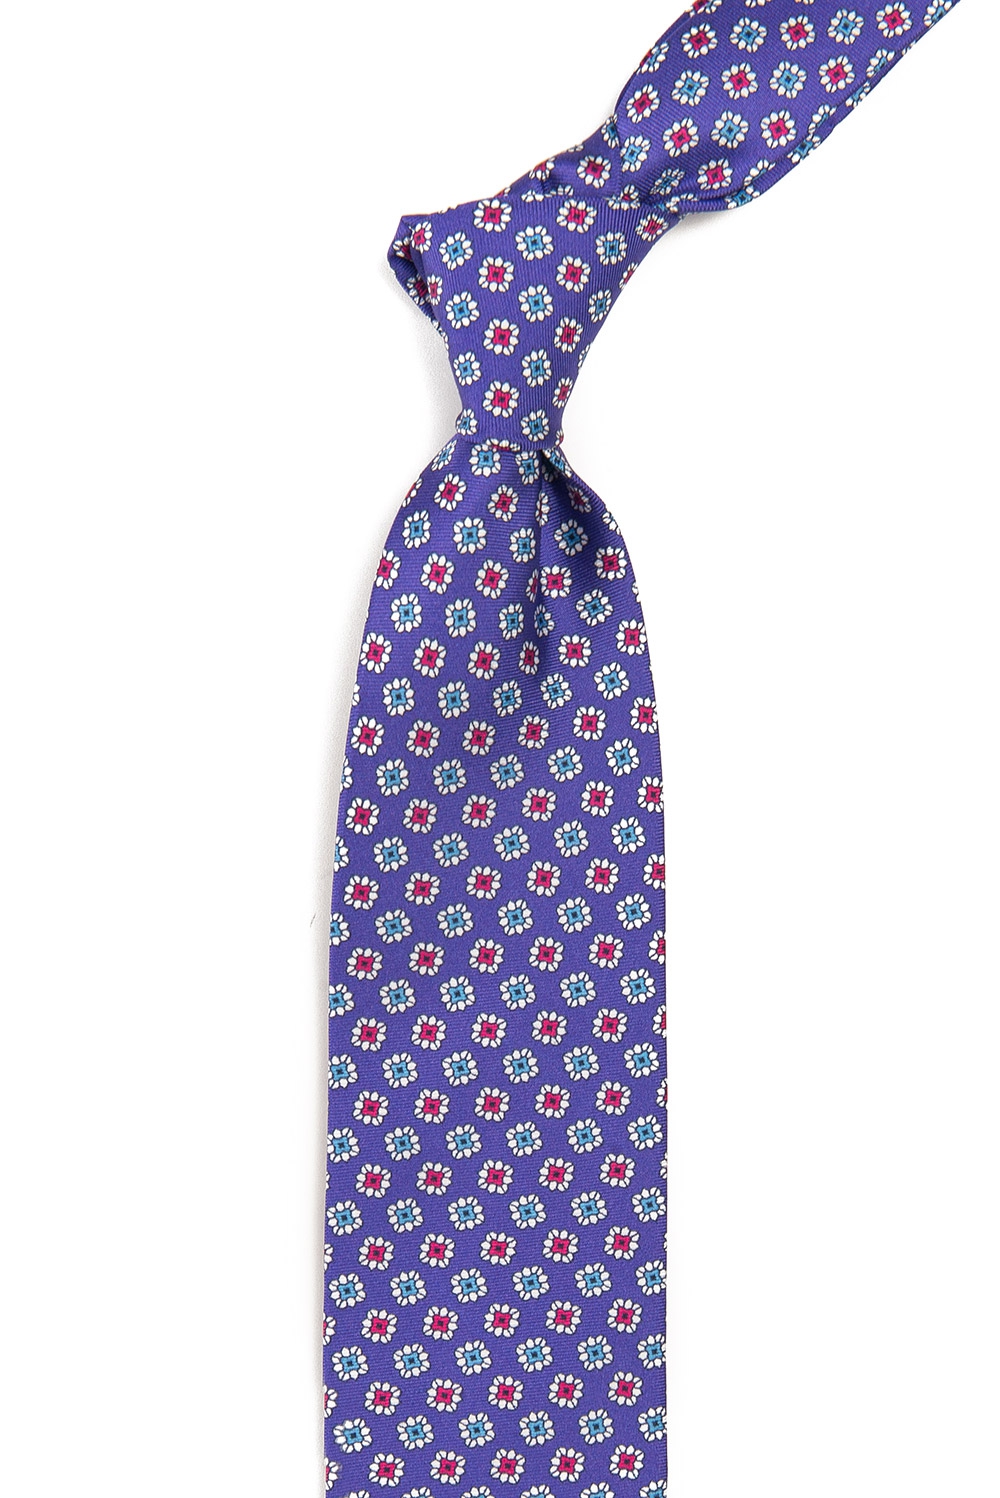 Purple Floral Tie 1